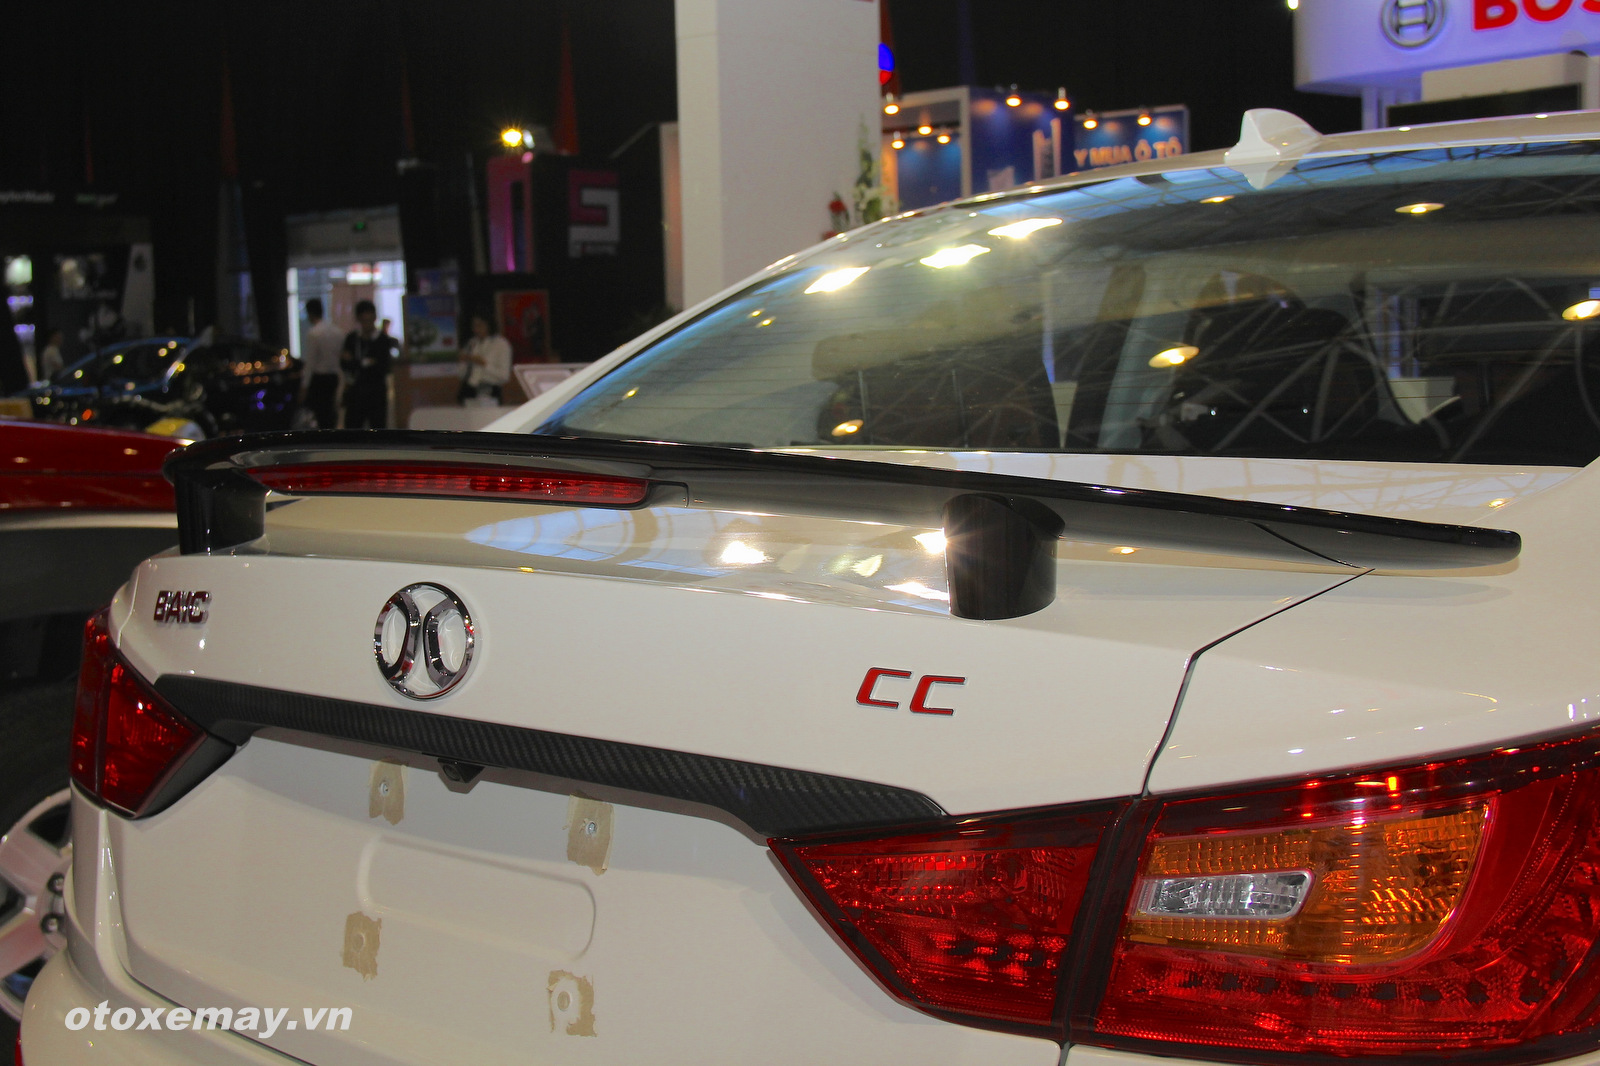 VIMS 2015: Cận cảnh sedan BAIC CC của Trung Quốc 18